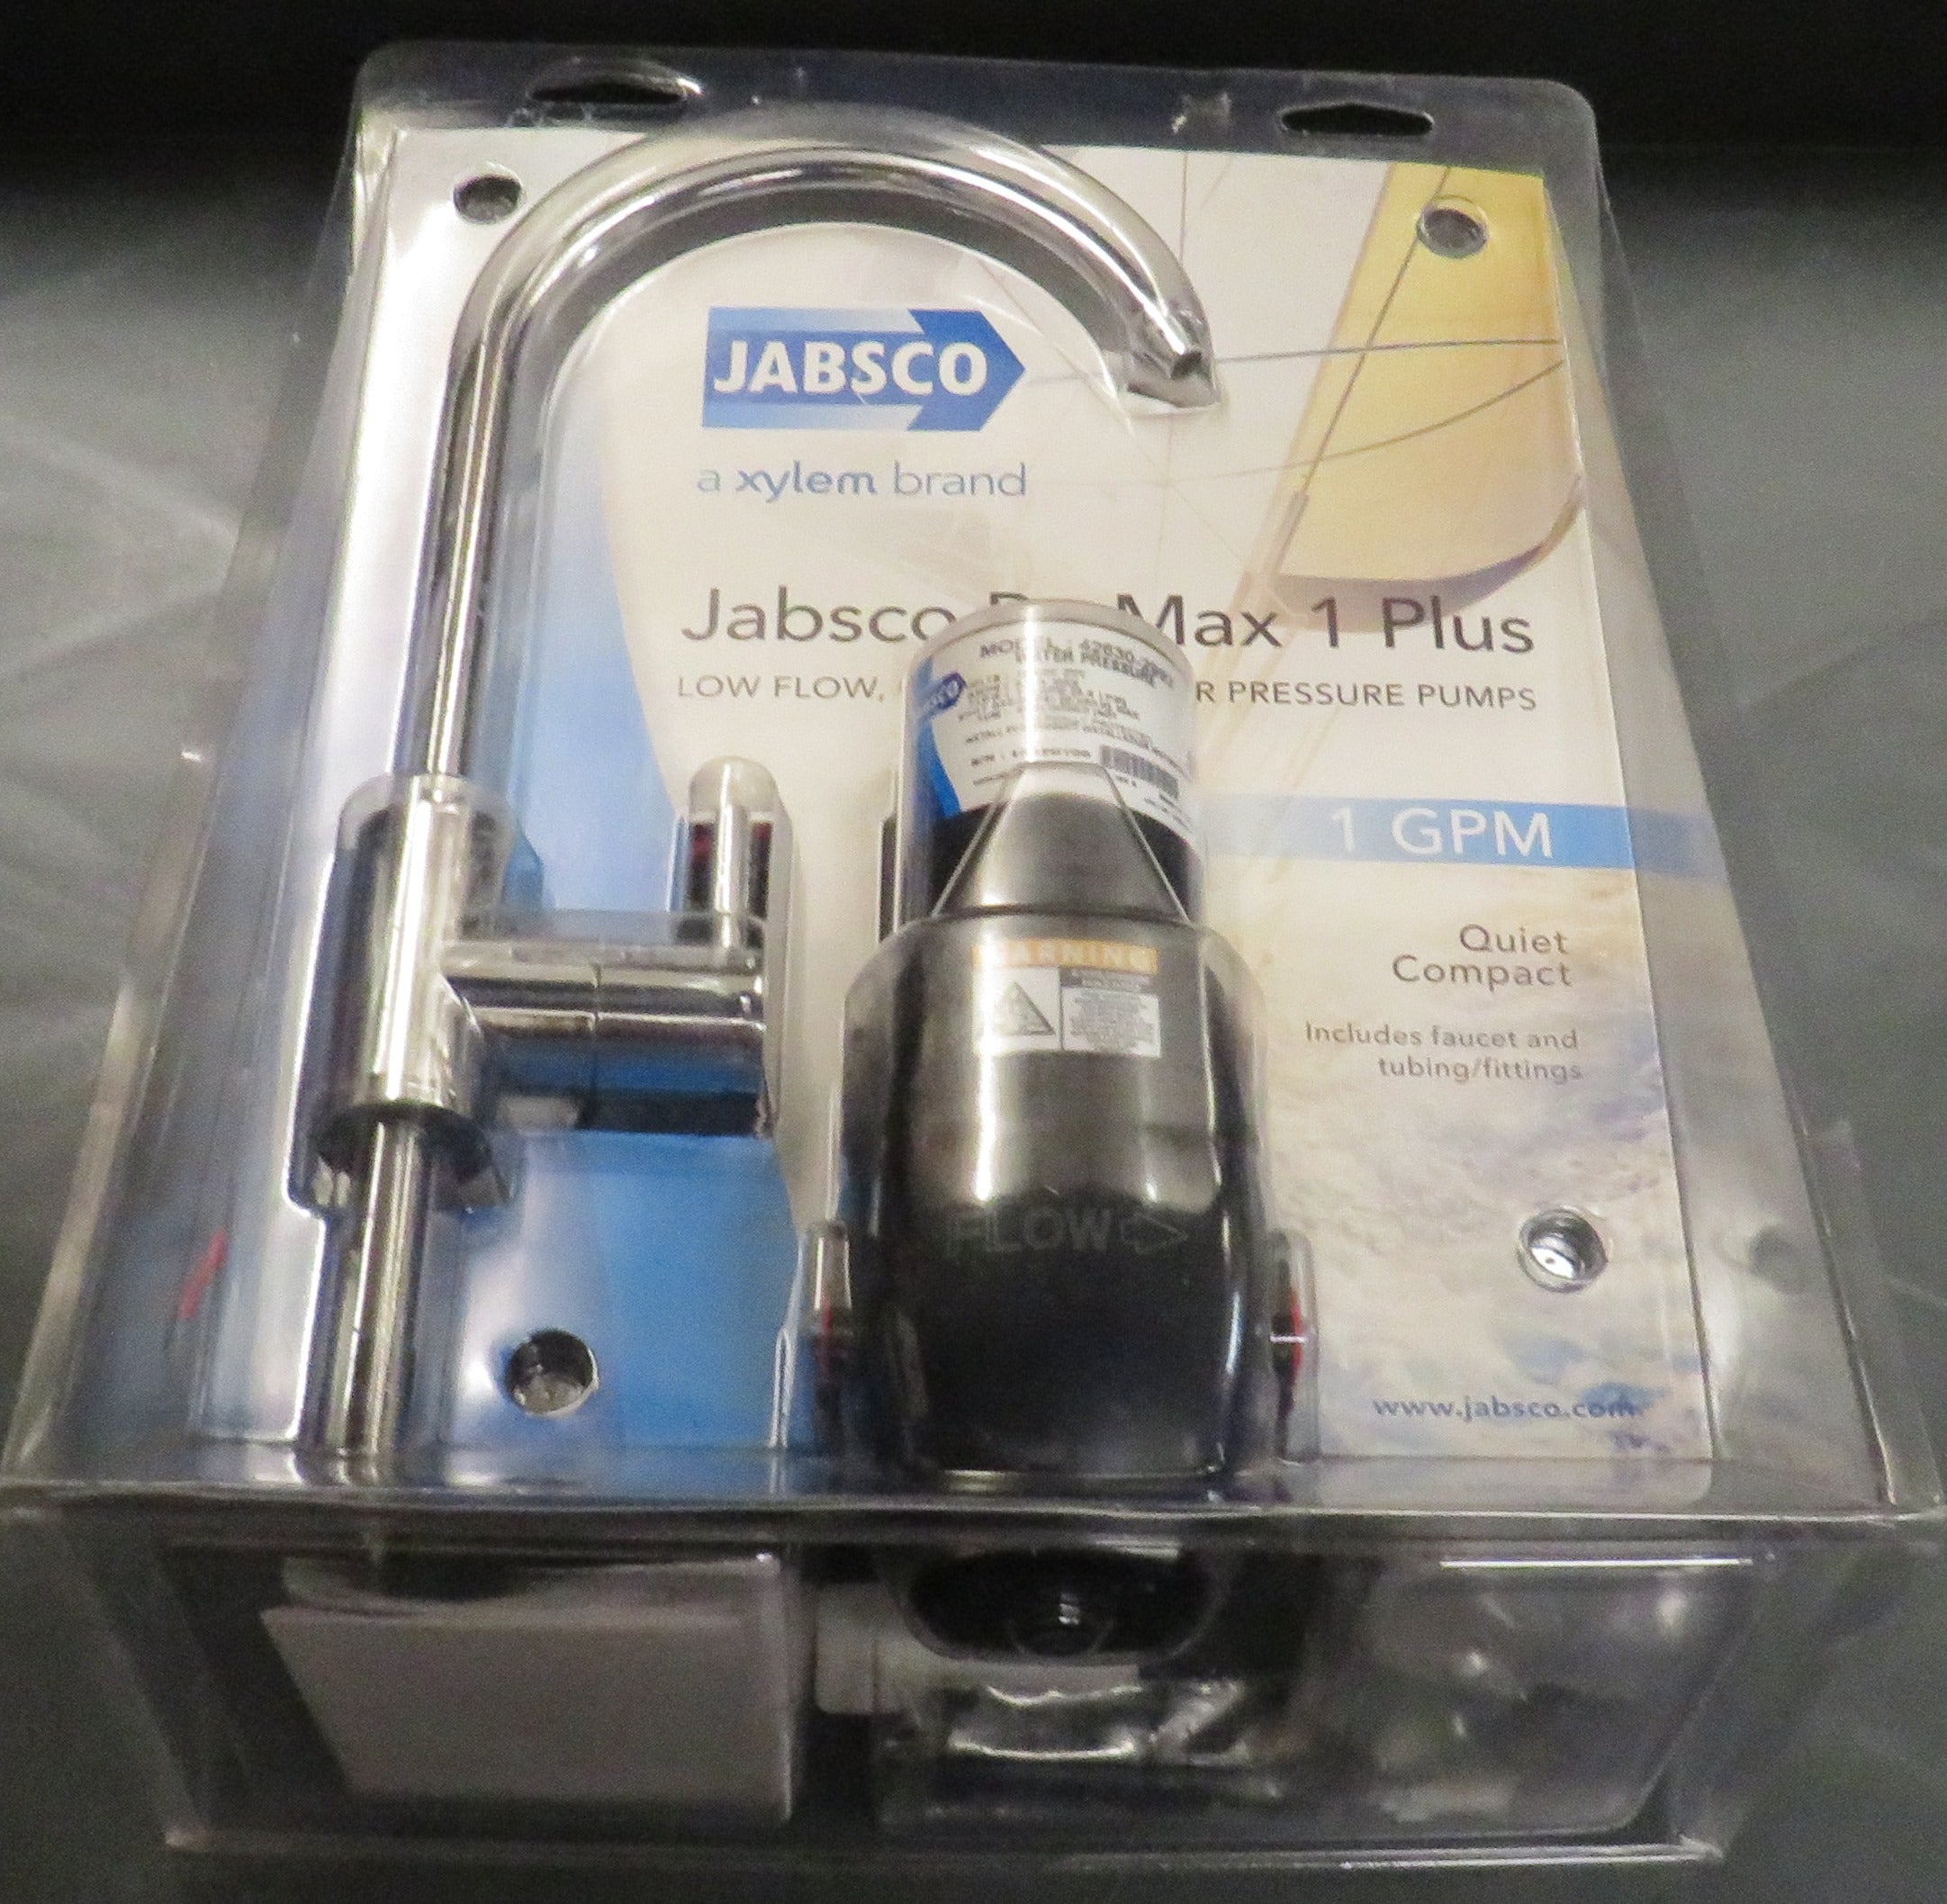 Jabsco 42630-3992 Par Max 1 Plus 1 GPM Low Flow, Compact Water Pressure Pump, Faucet & Tubing Fittings